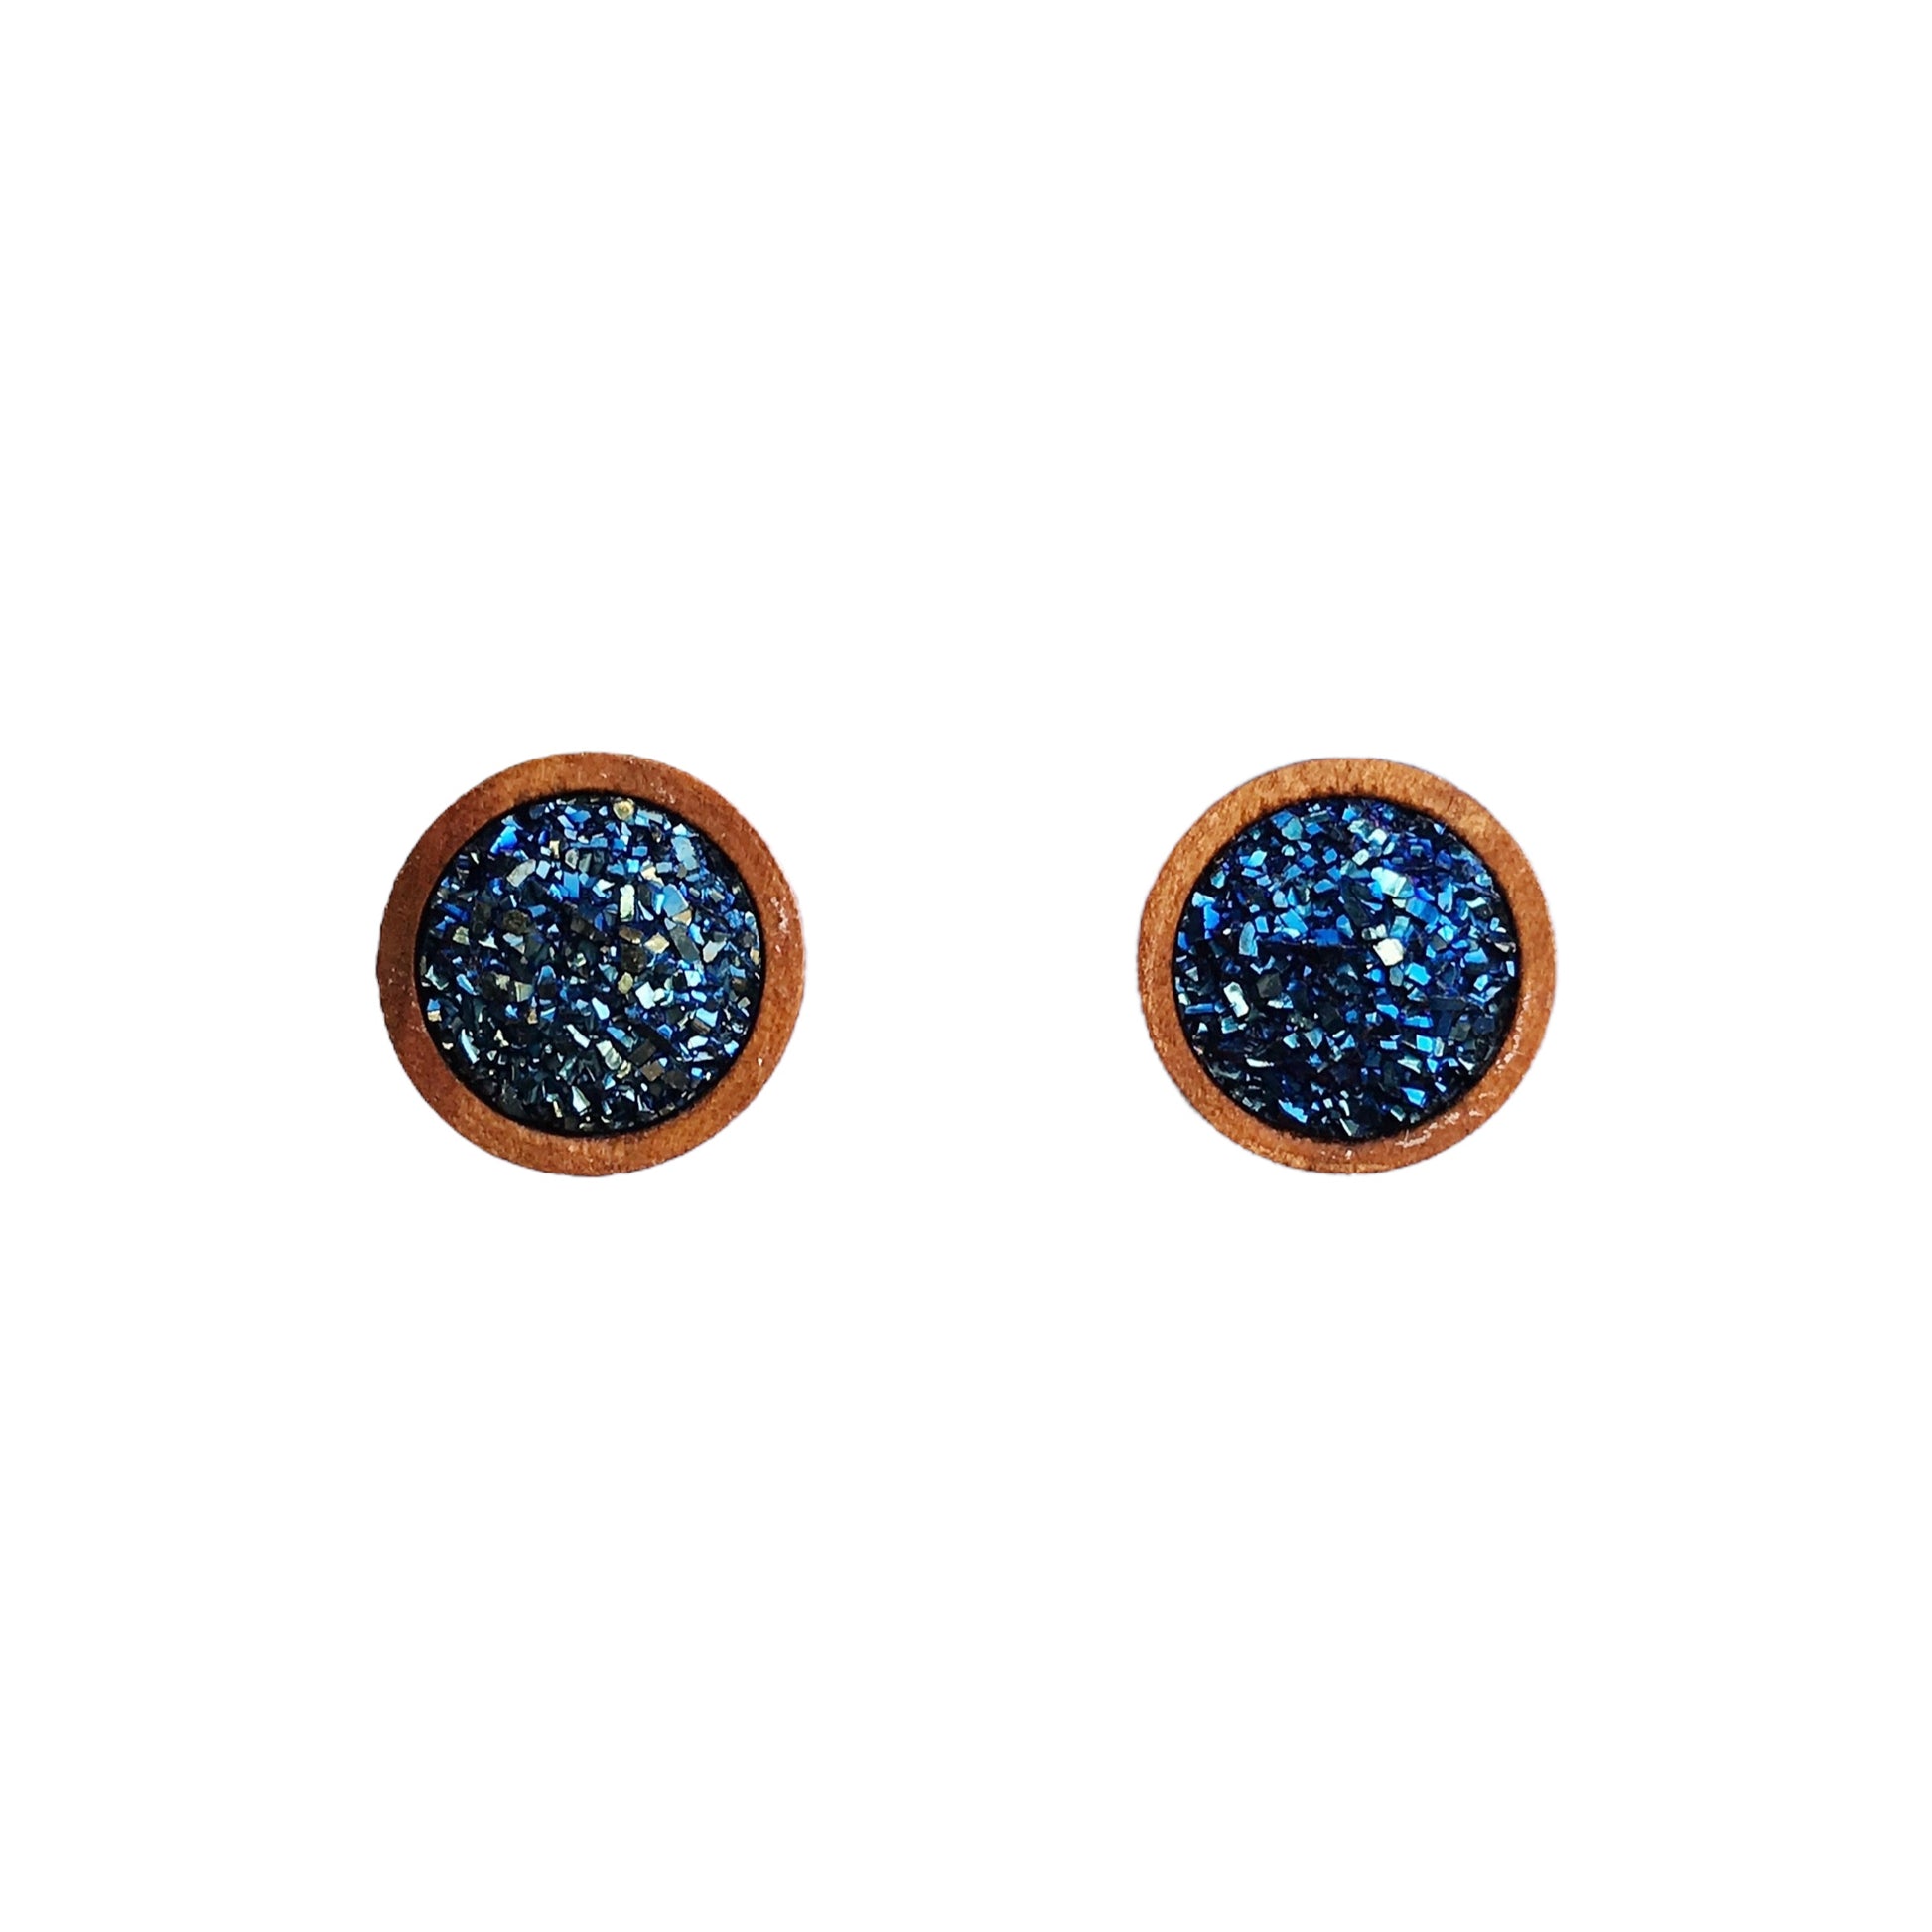 Blue Glitter Druzy Wood Stud Earrings - Sparkling Statement Accessories